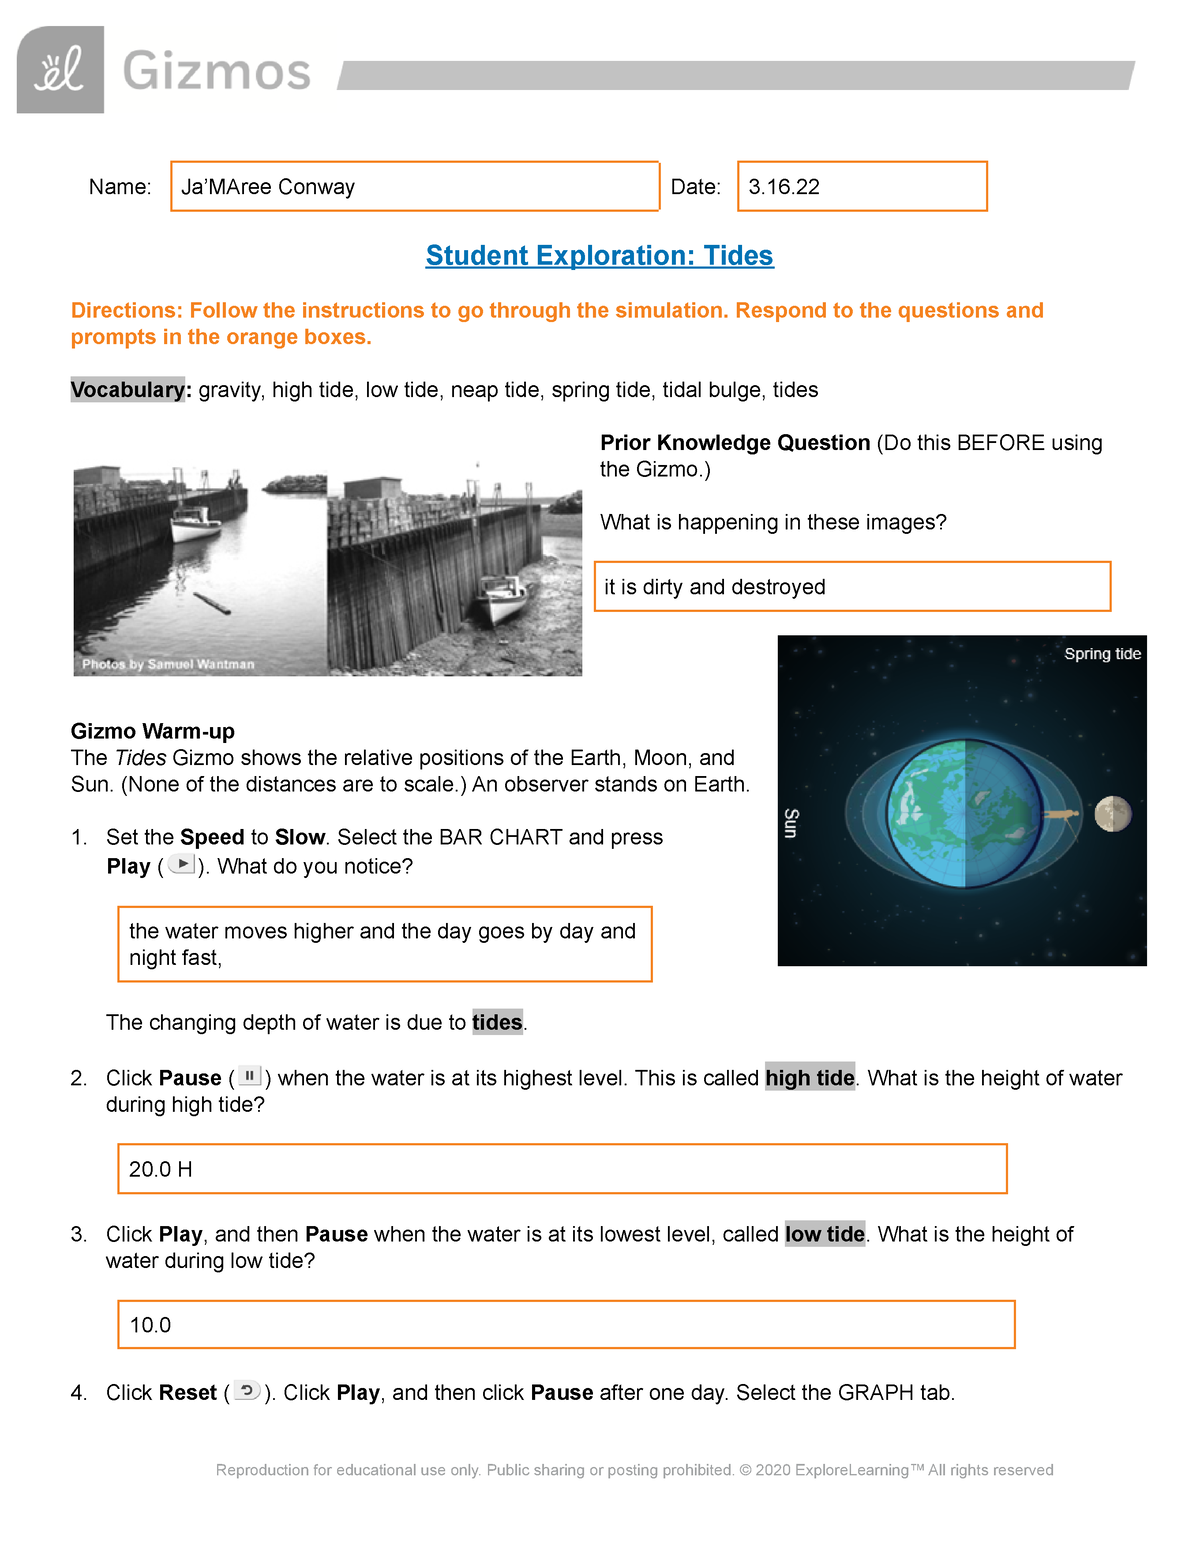 Student Exploration Tides Worksheet Answers